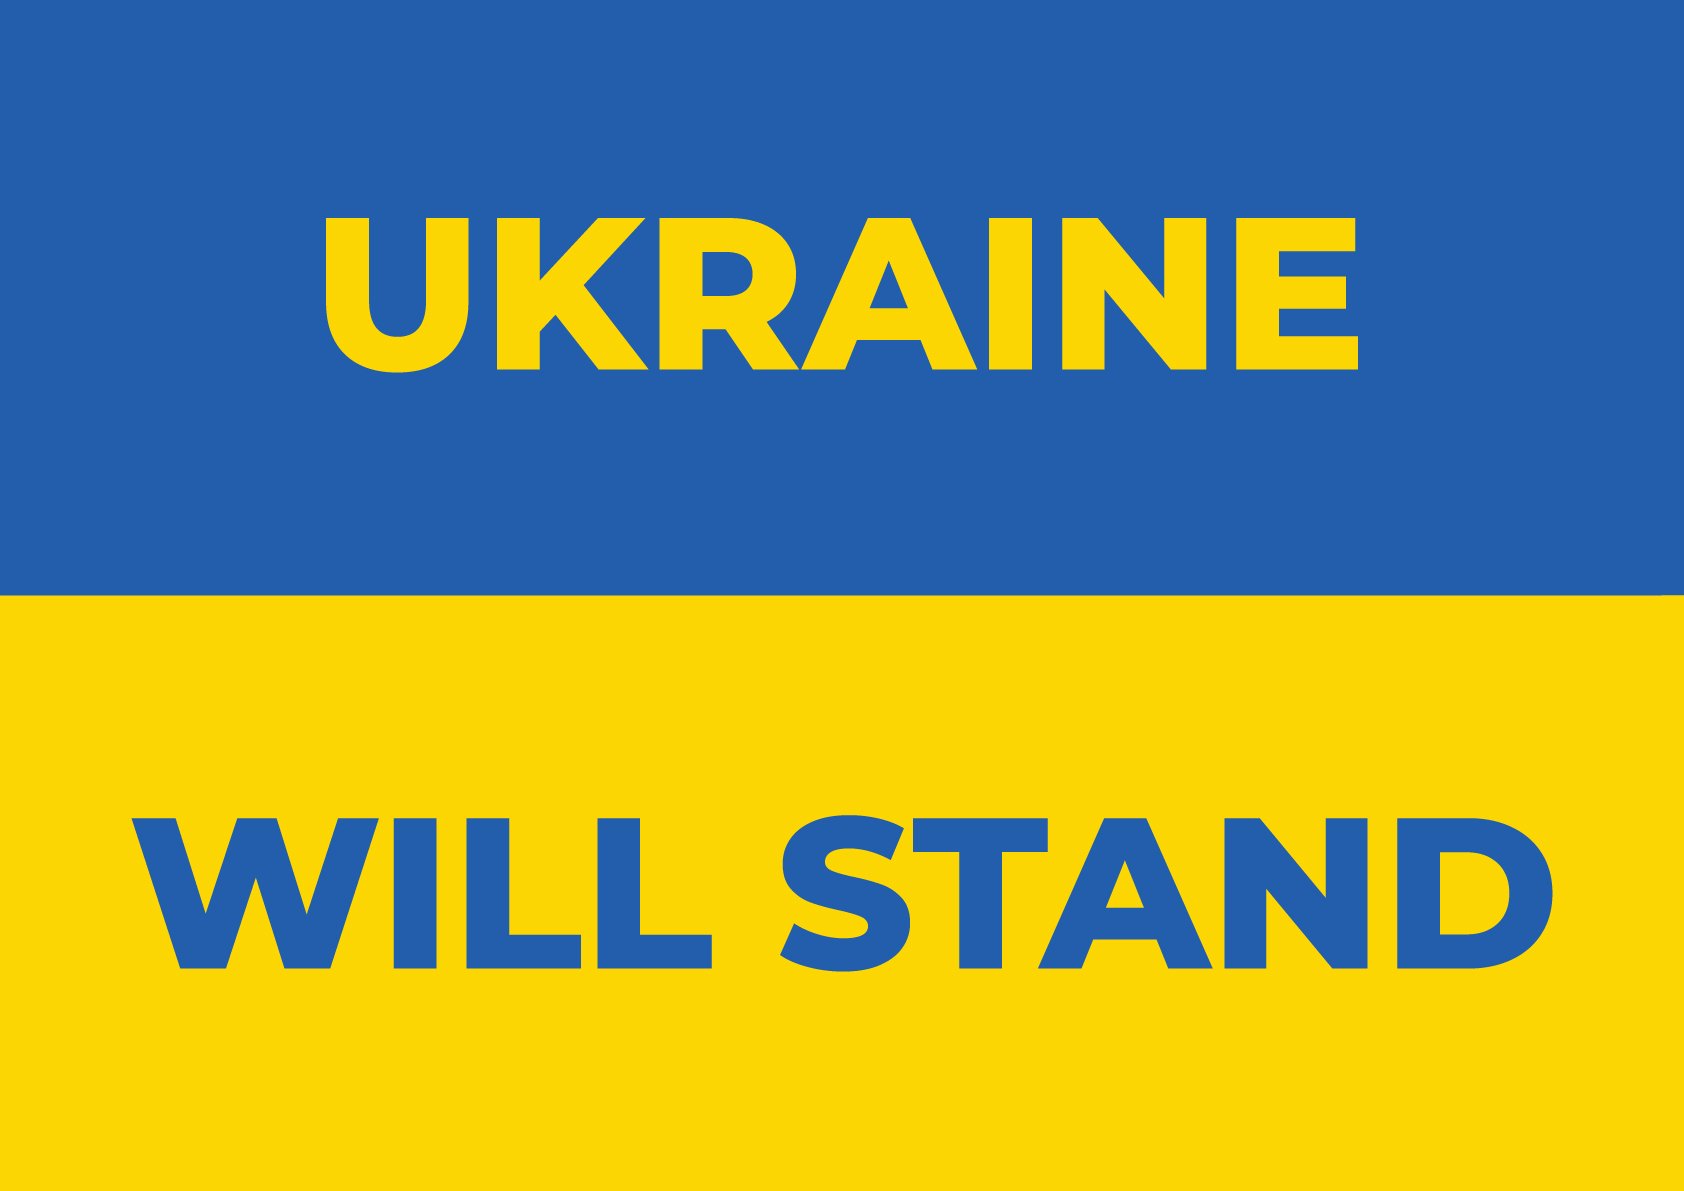 A2_UKRAUNE_WILL_STAND.jpg